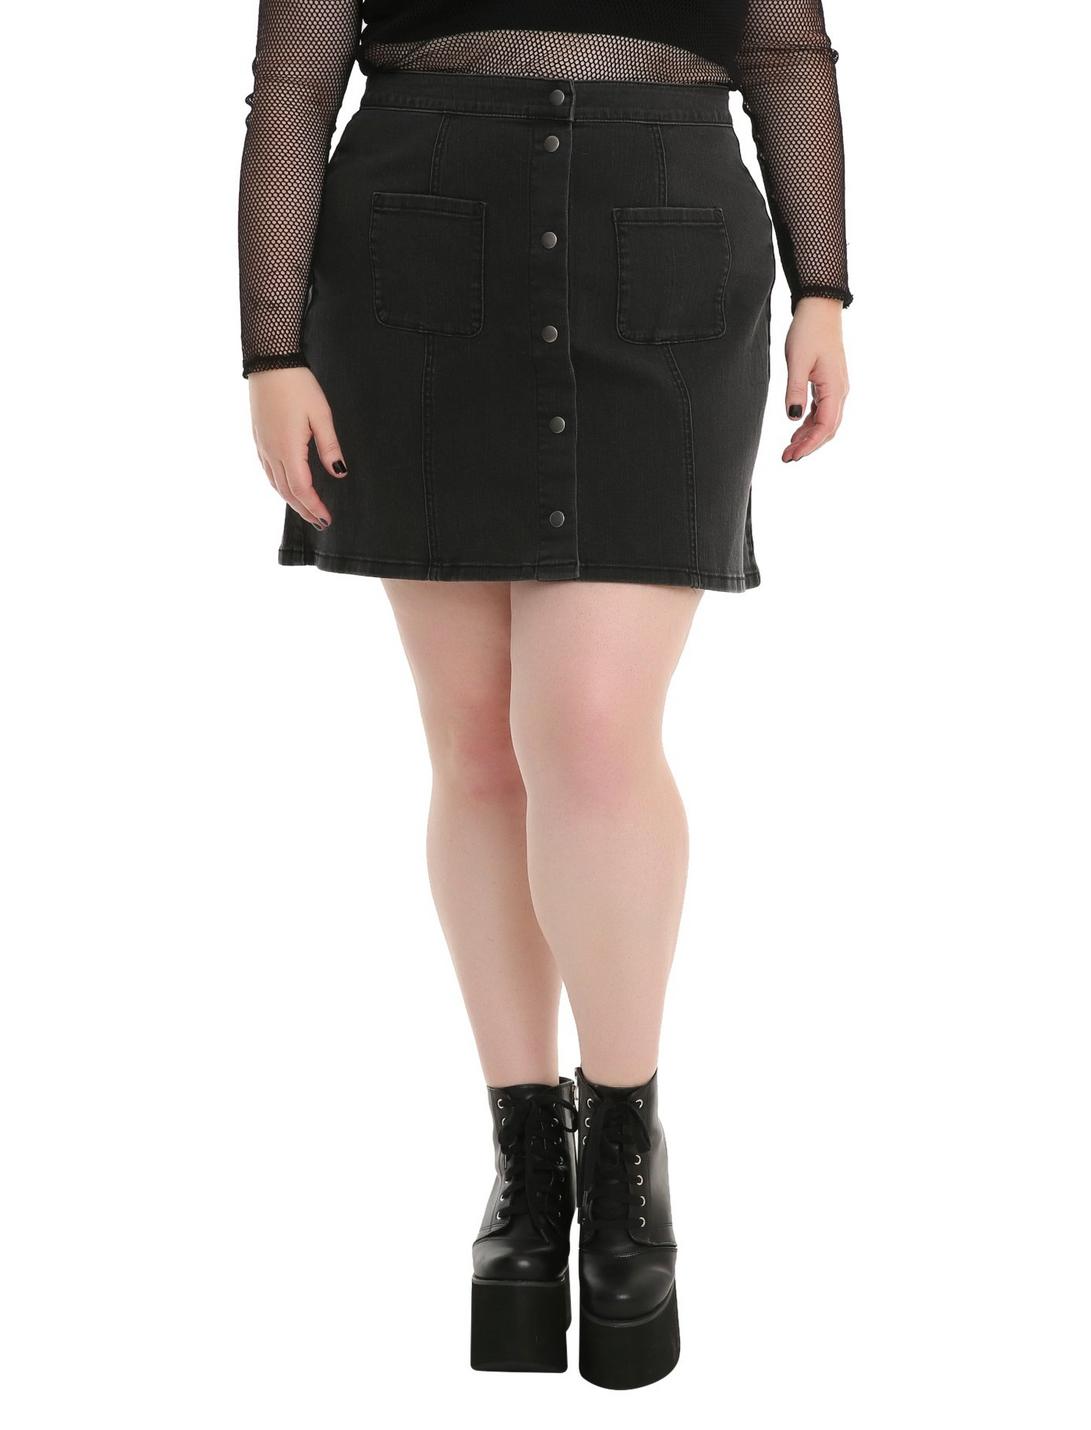 Blackheart Black Denim Snap Front Skirt Plus Size, BLACK, hi-res